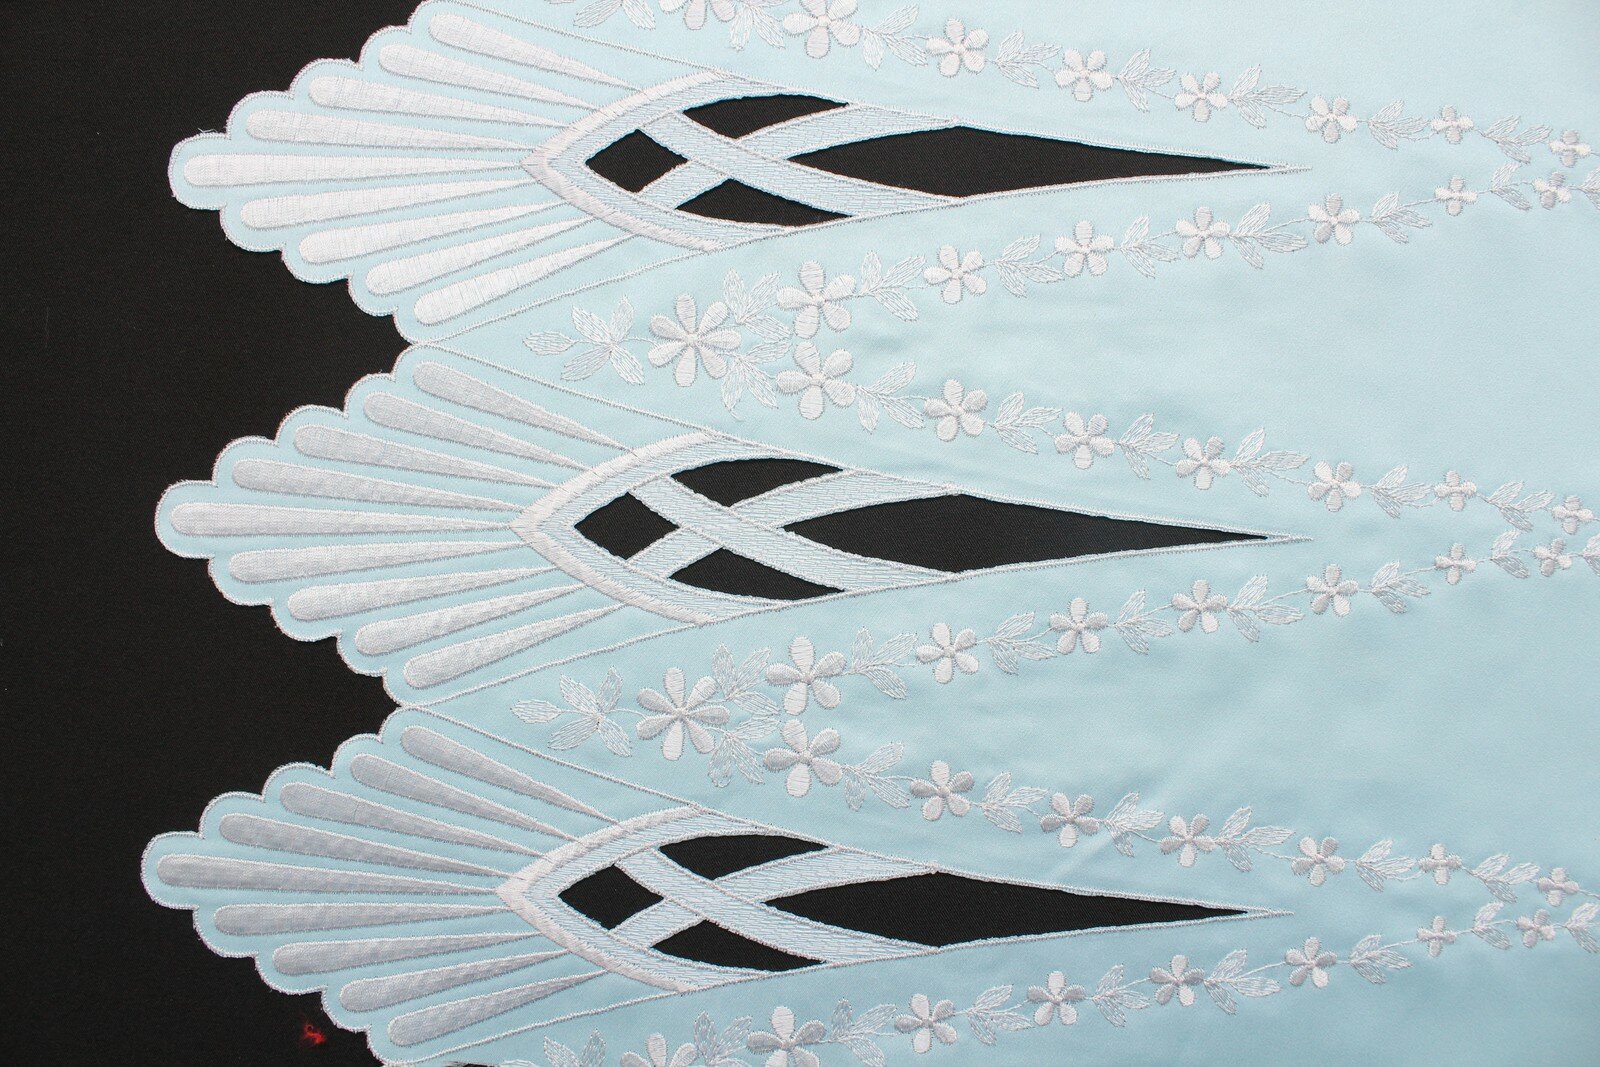 Ткань Вышивка ришелье (perfori) хлопком на сатине нежно голубого цвета, кайма, ш138см, 0,5 м